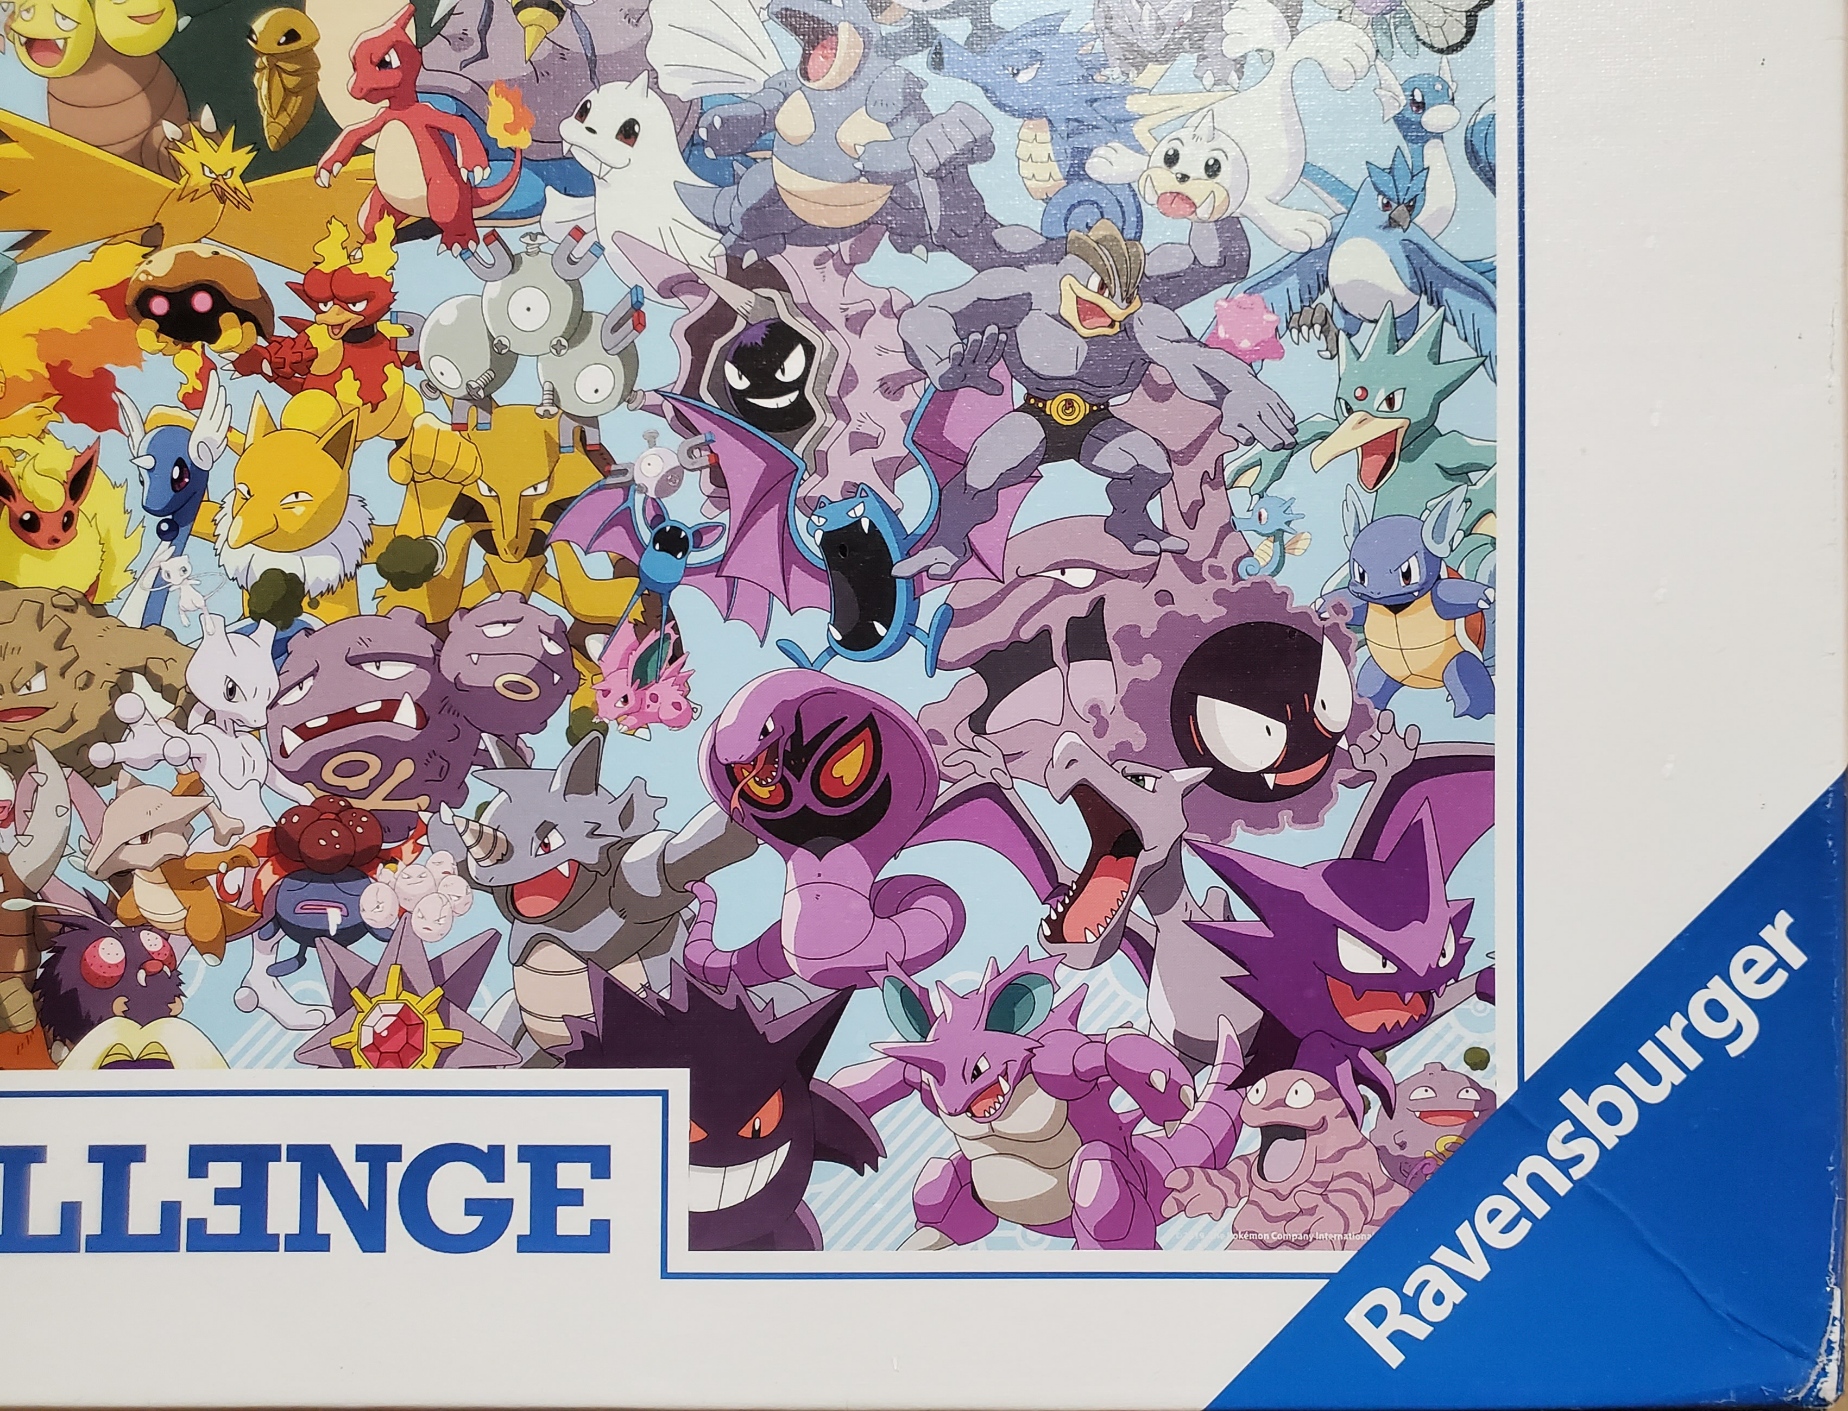 Ravensburger Pokemon Challenge 1000 Piece Puzzle – The Puzzle Collections